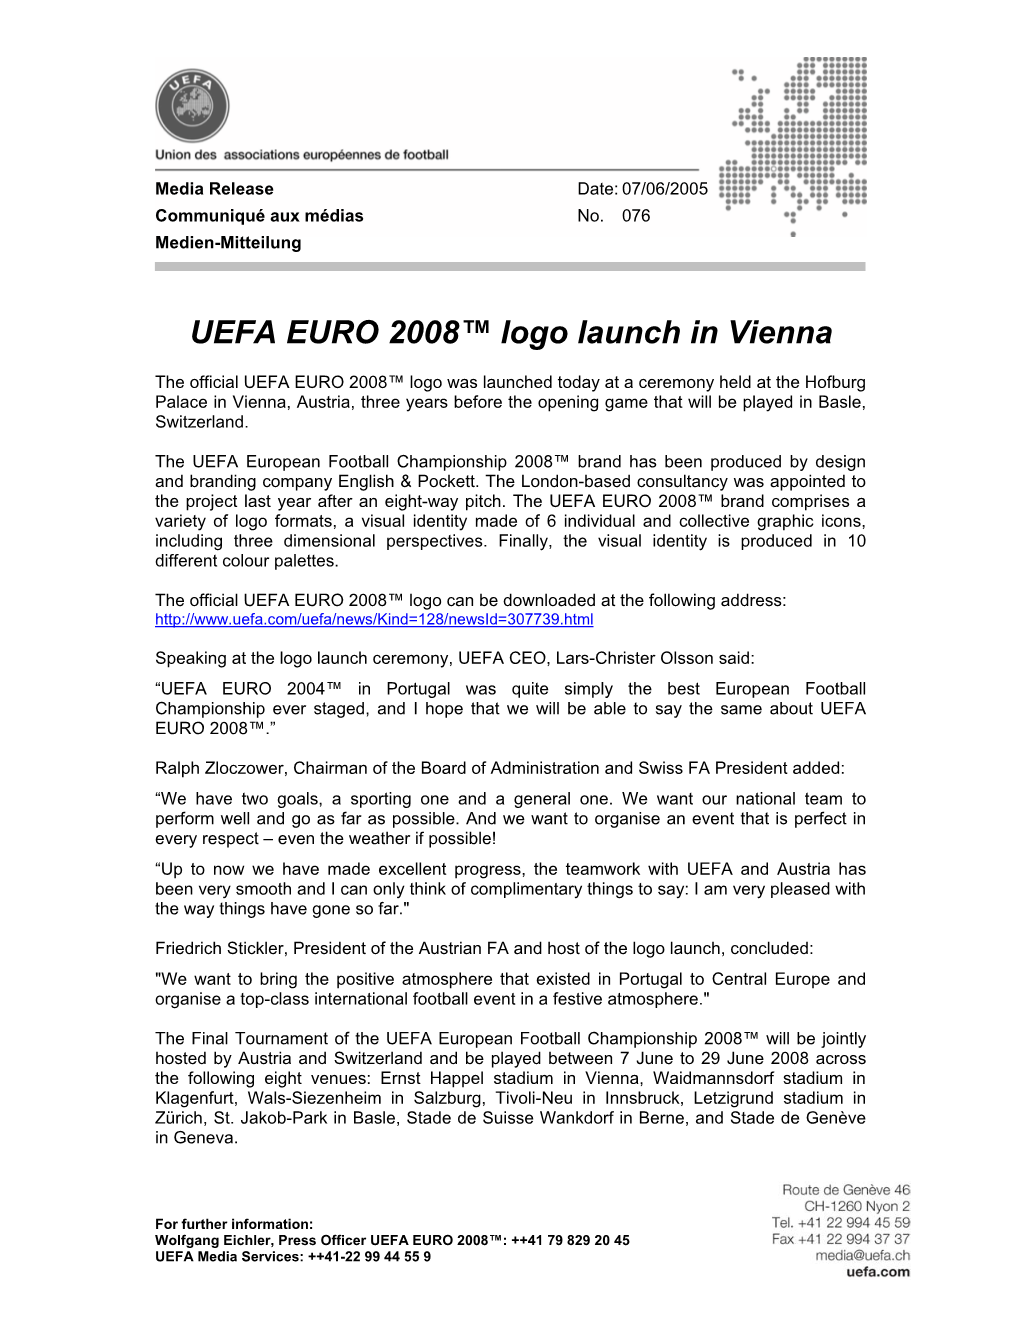 UEFA EURO 2008™ Logo Launch in Vienna